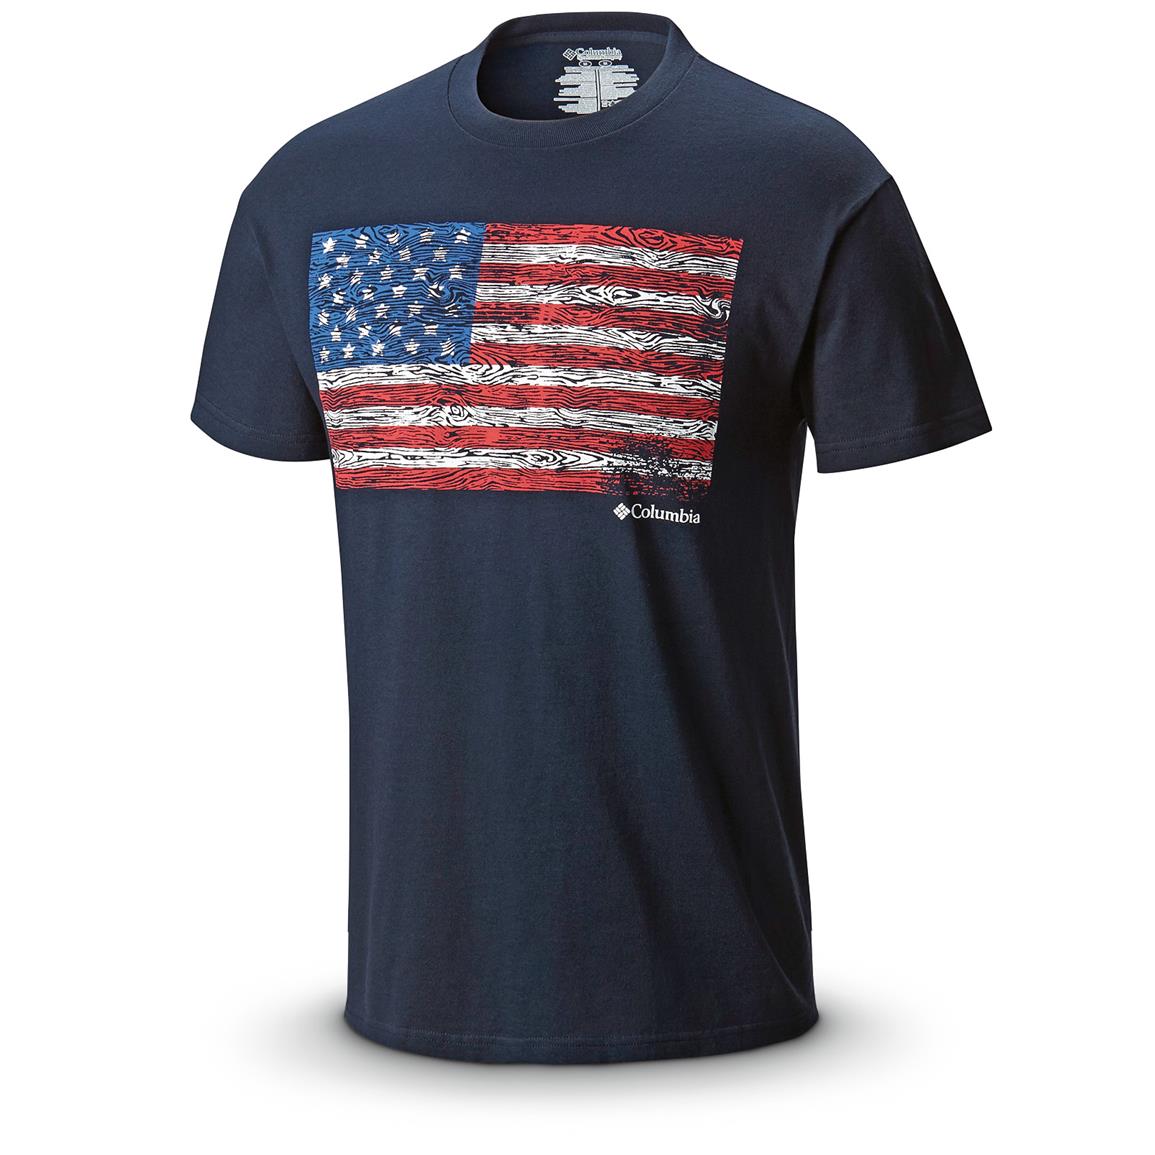 Columbia Men's CSC Tree Flag T-Shirt - 653769, T-Shirts at Sportsman's ...